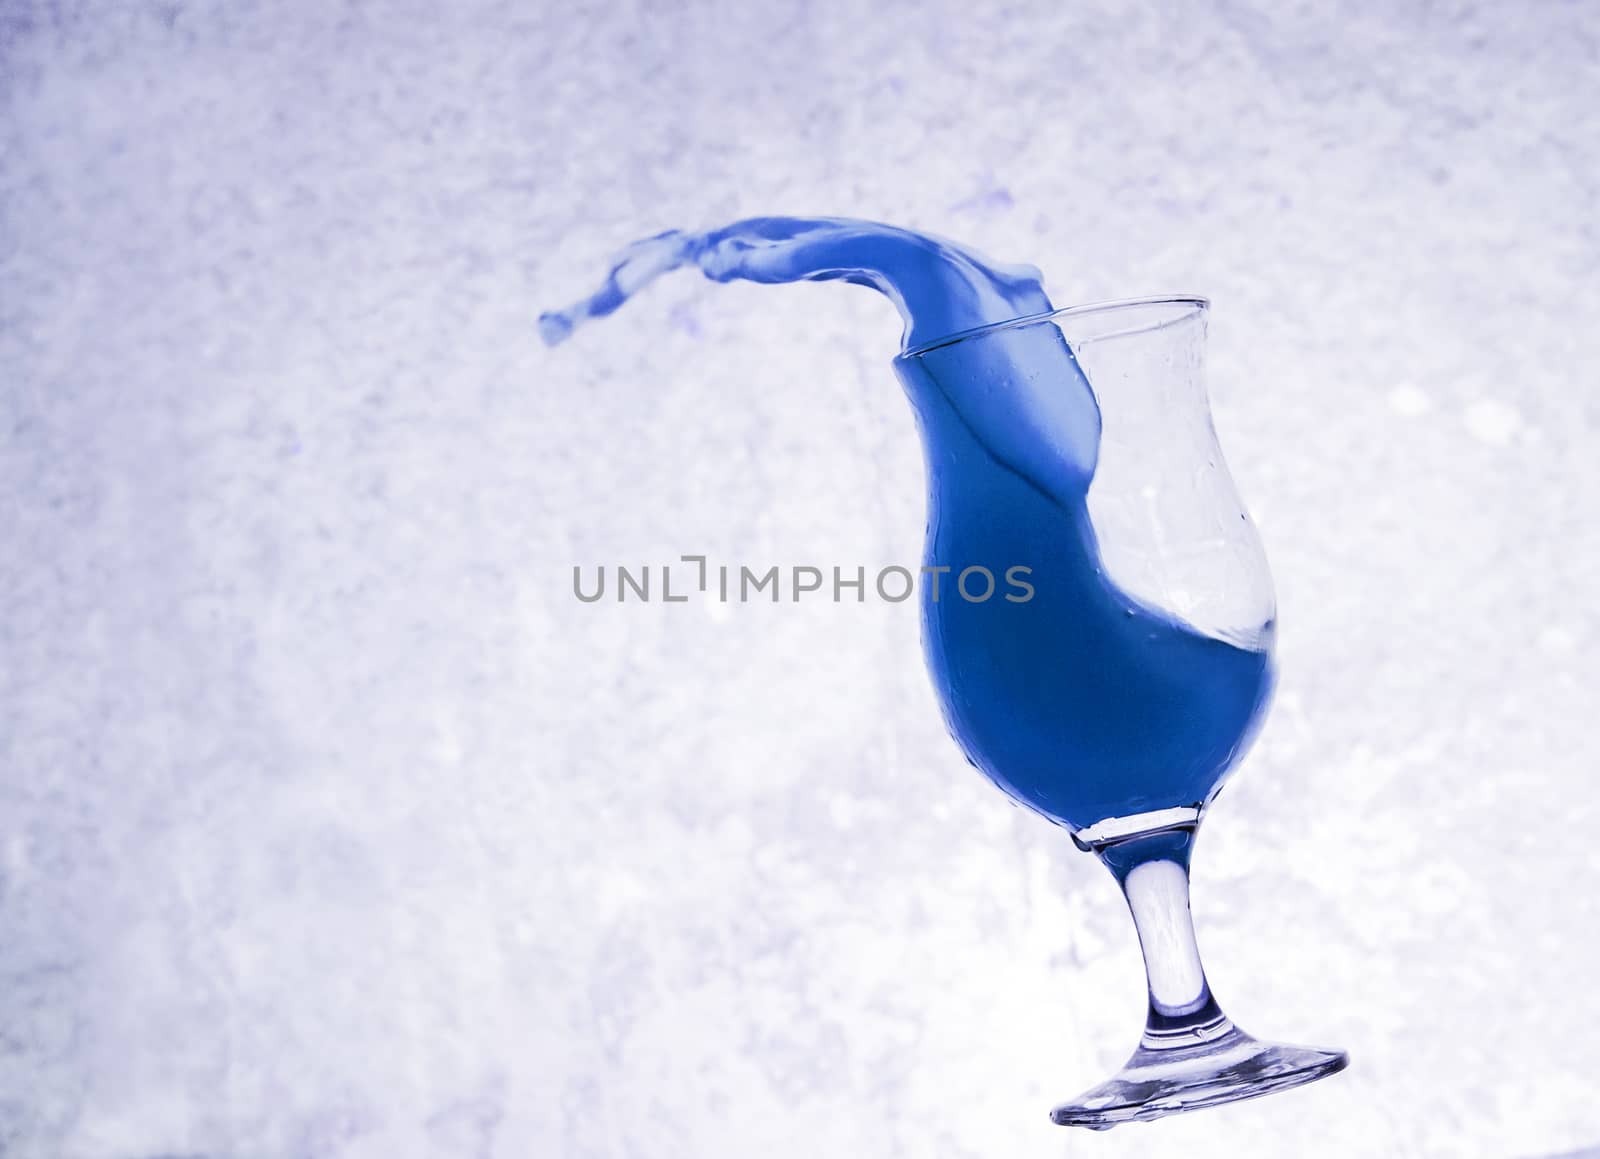 Water Splashing From Glass, Grunge Background by jimbophoto